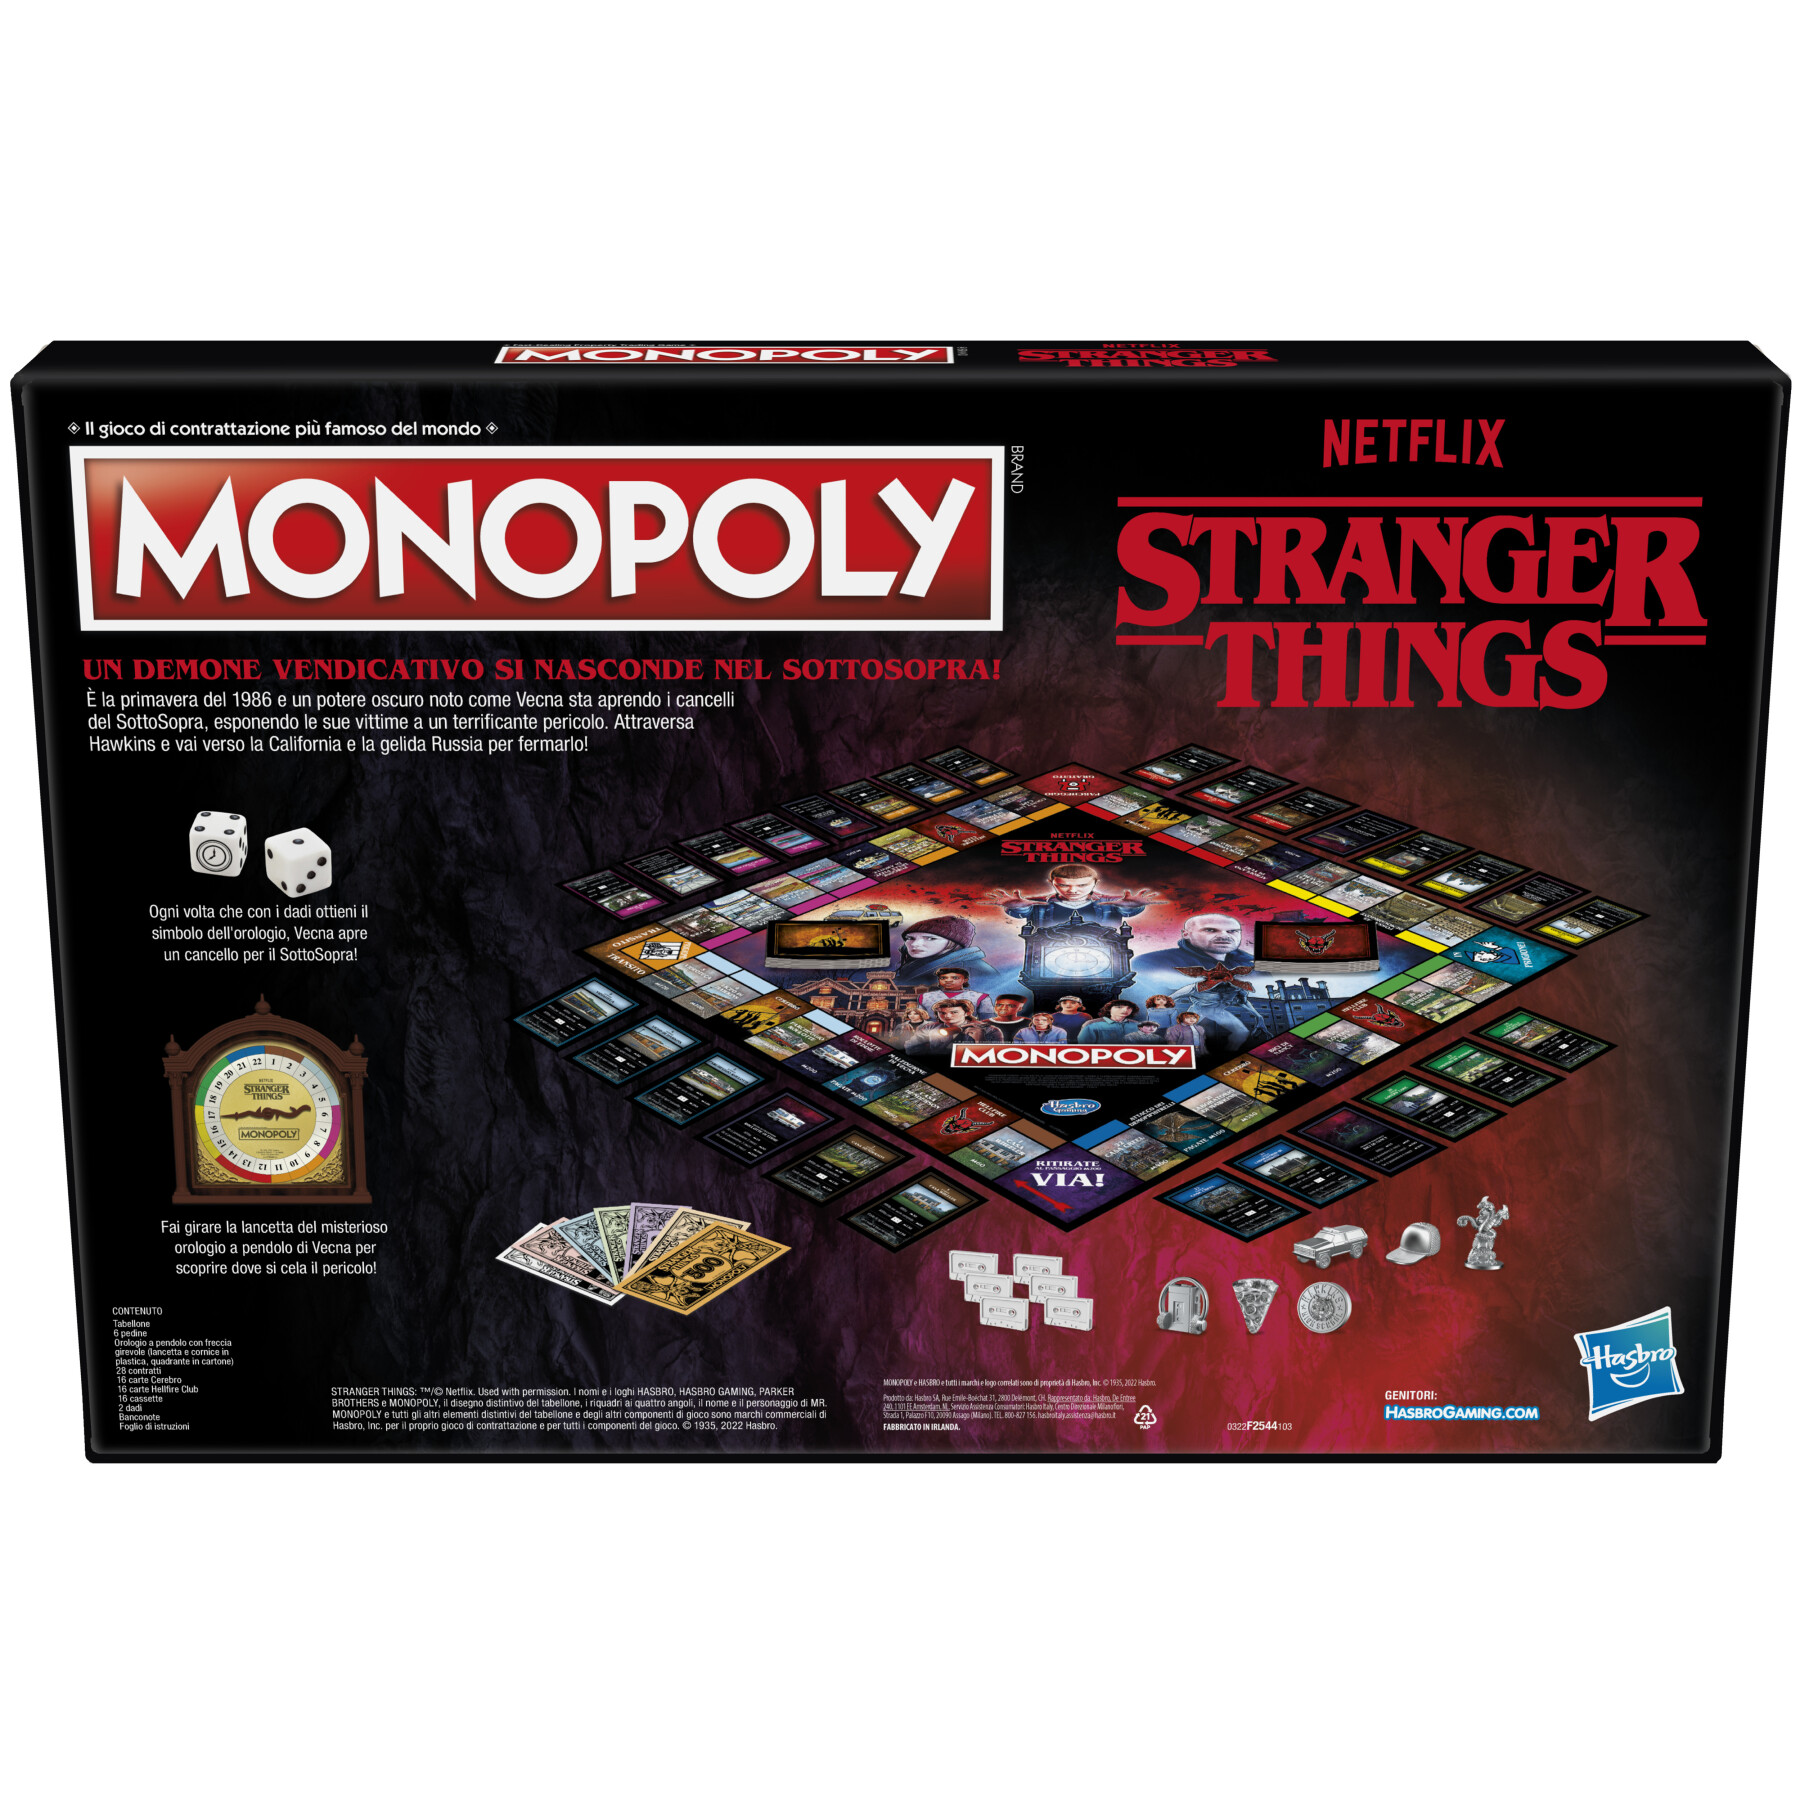 Monopoly stranger things (ispirato alla 4 stagione di netflix "stranger things") - MONOPOLY